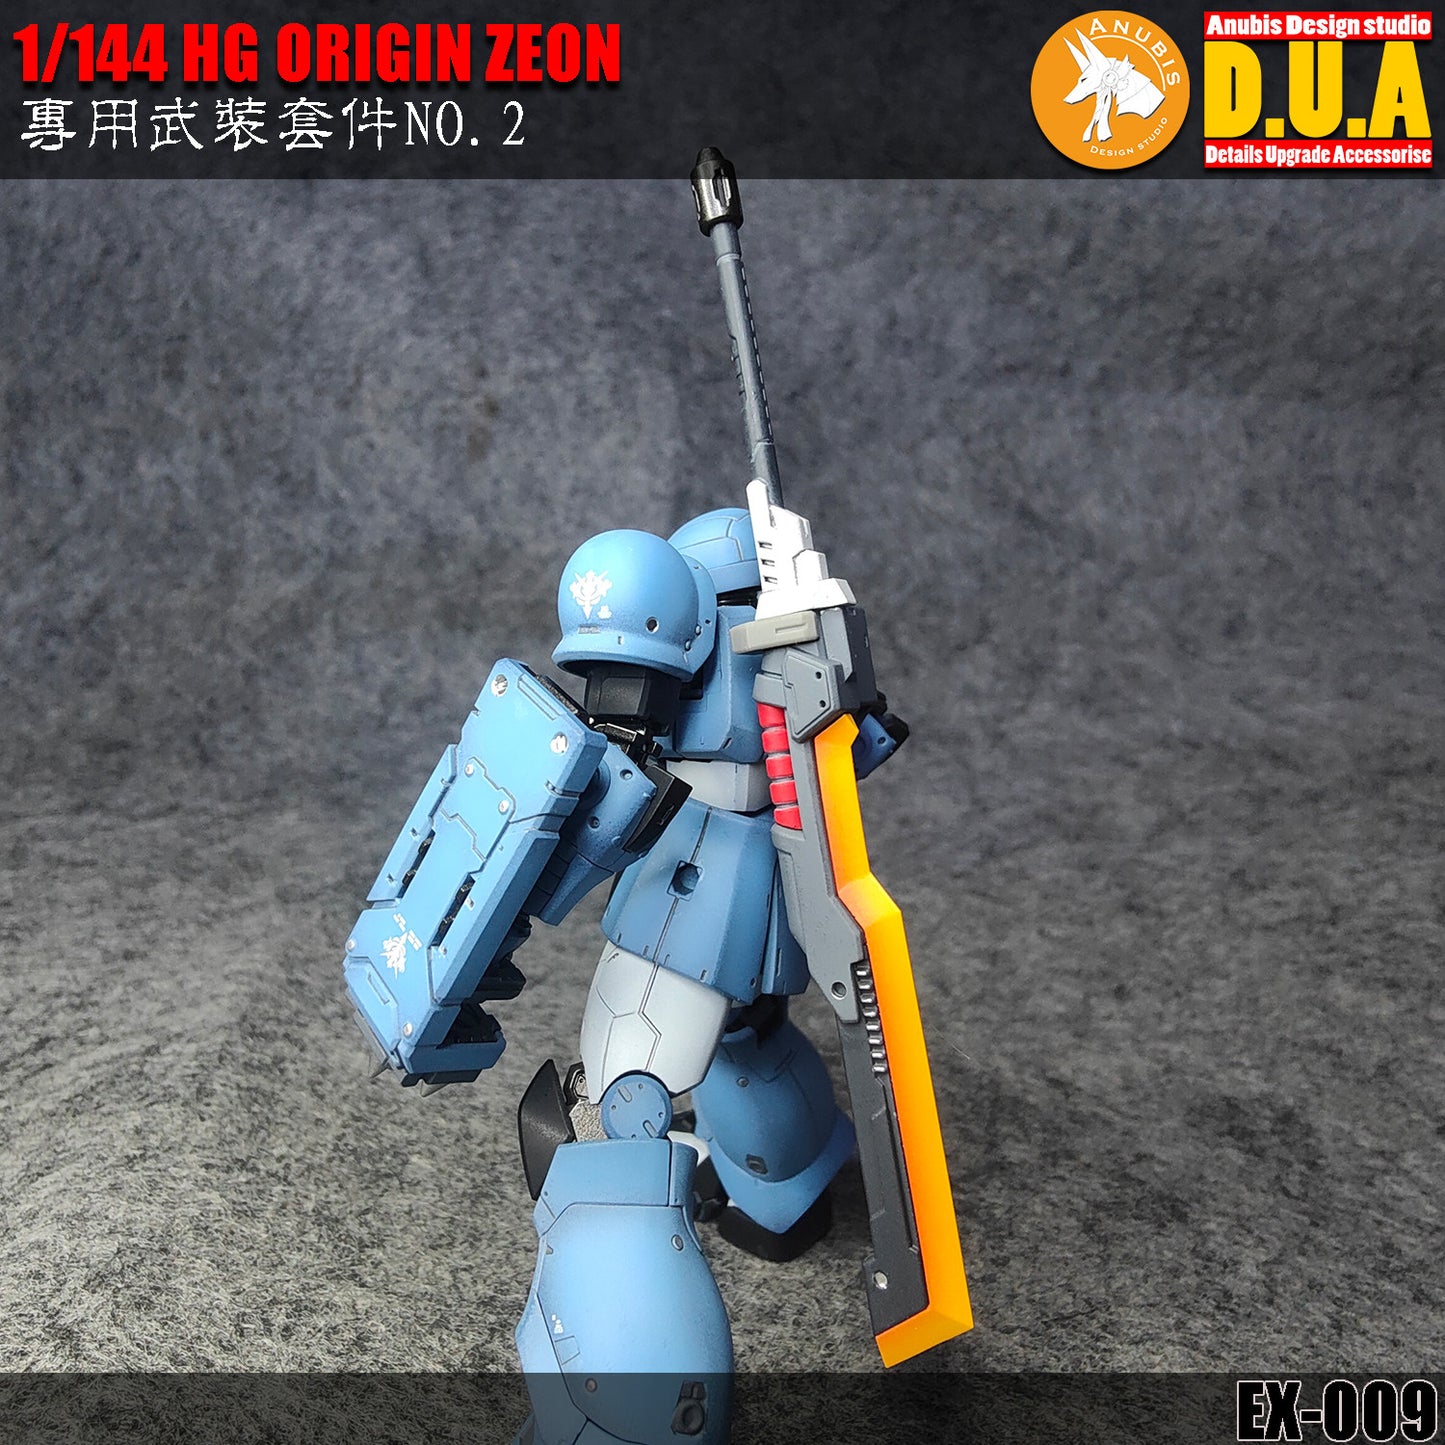 Anubis D.U.A EX-009 Armament system HG Origin Zeon